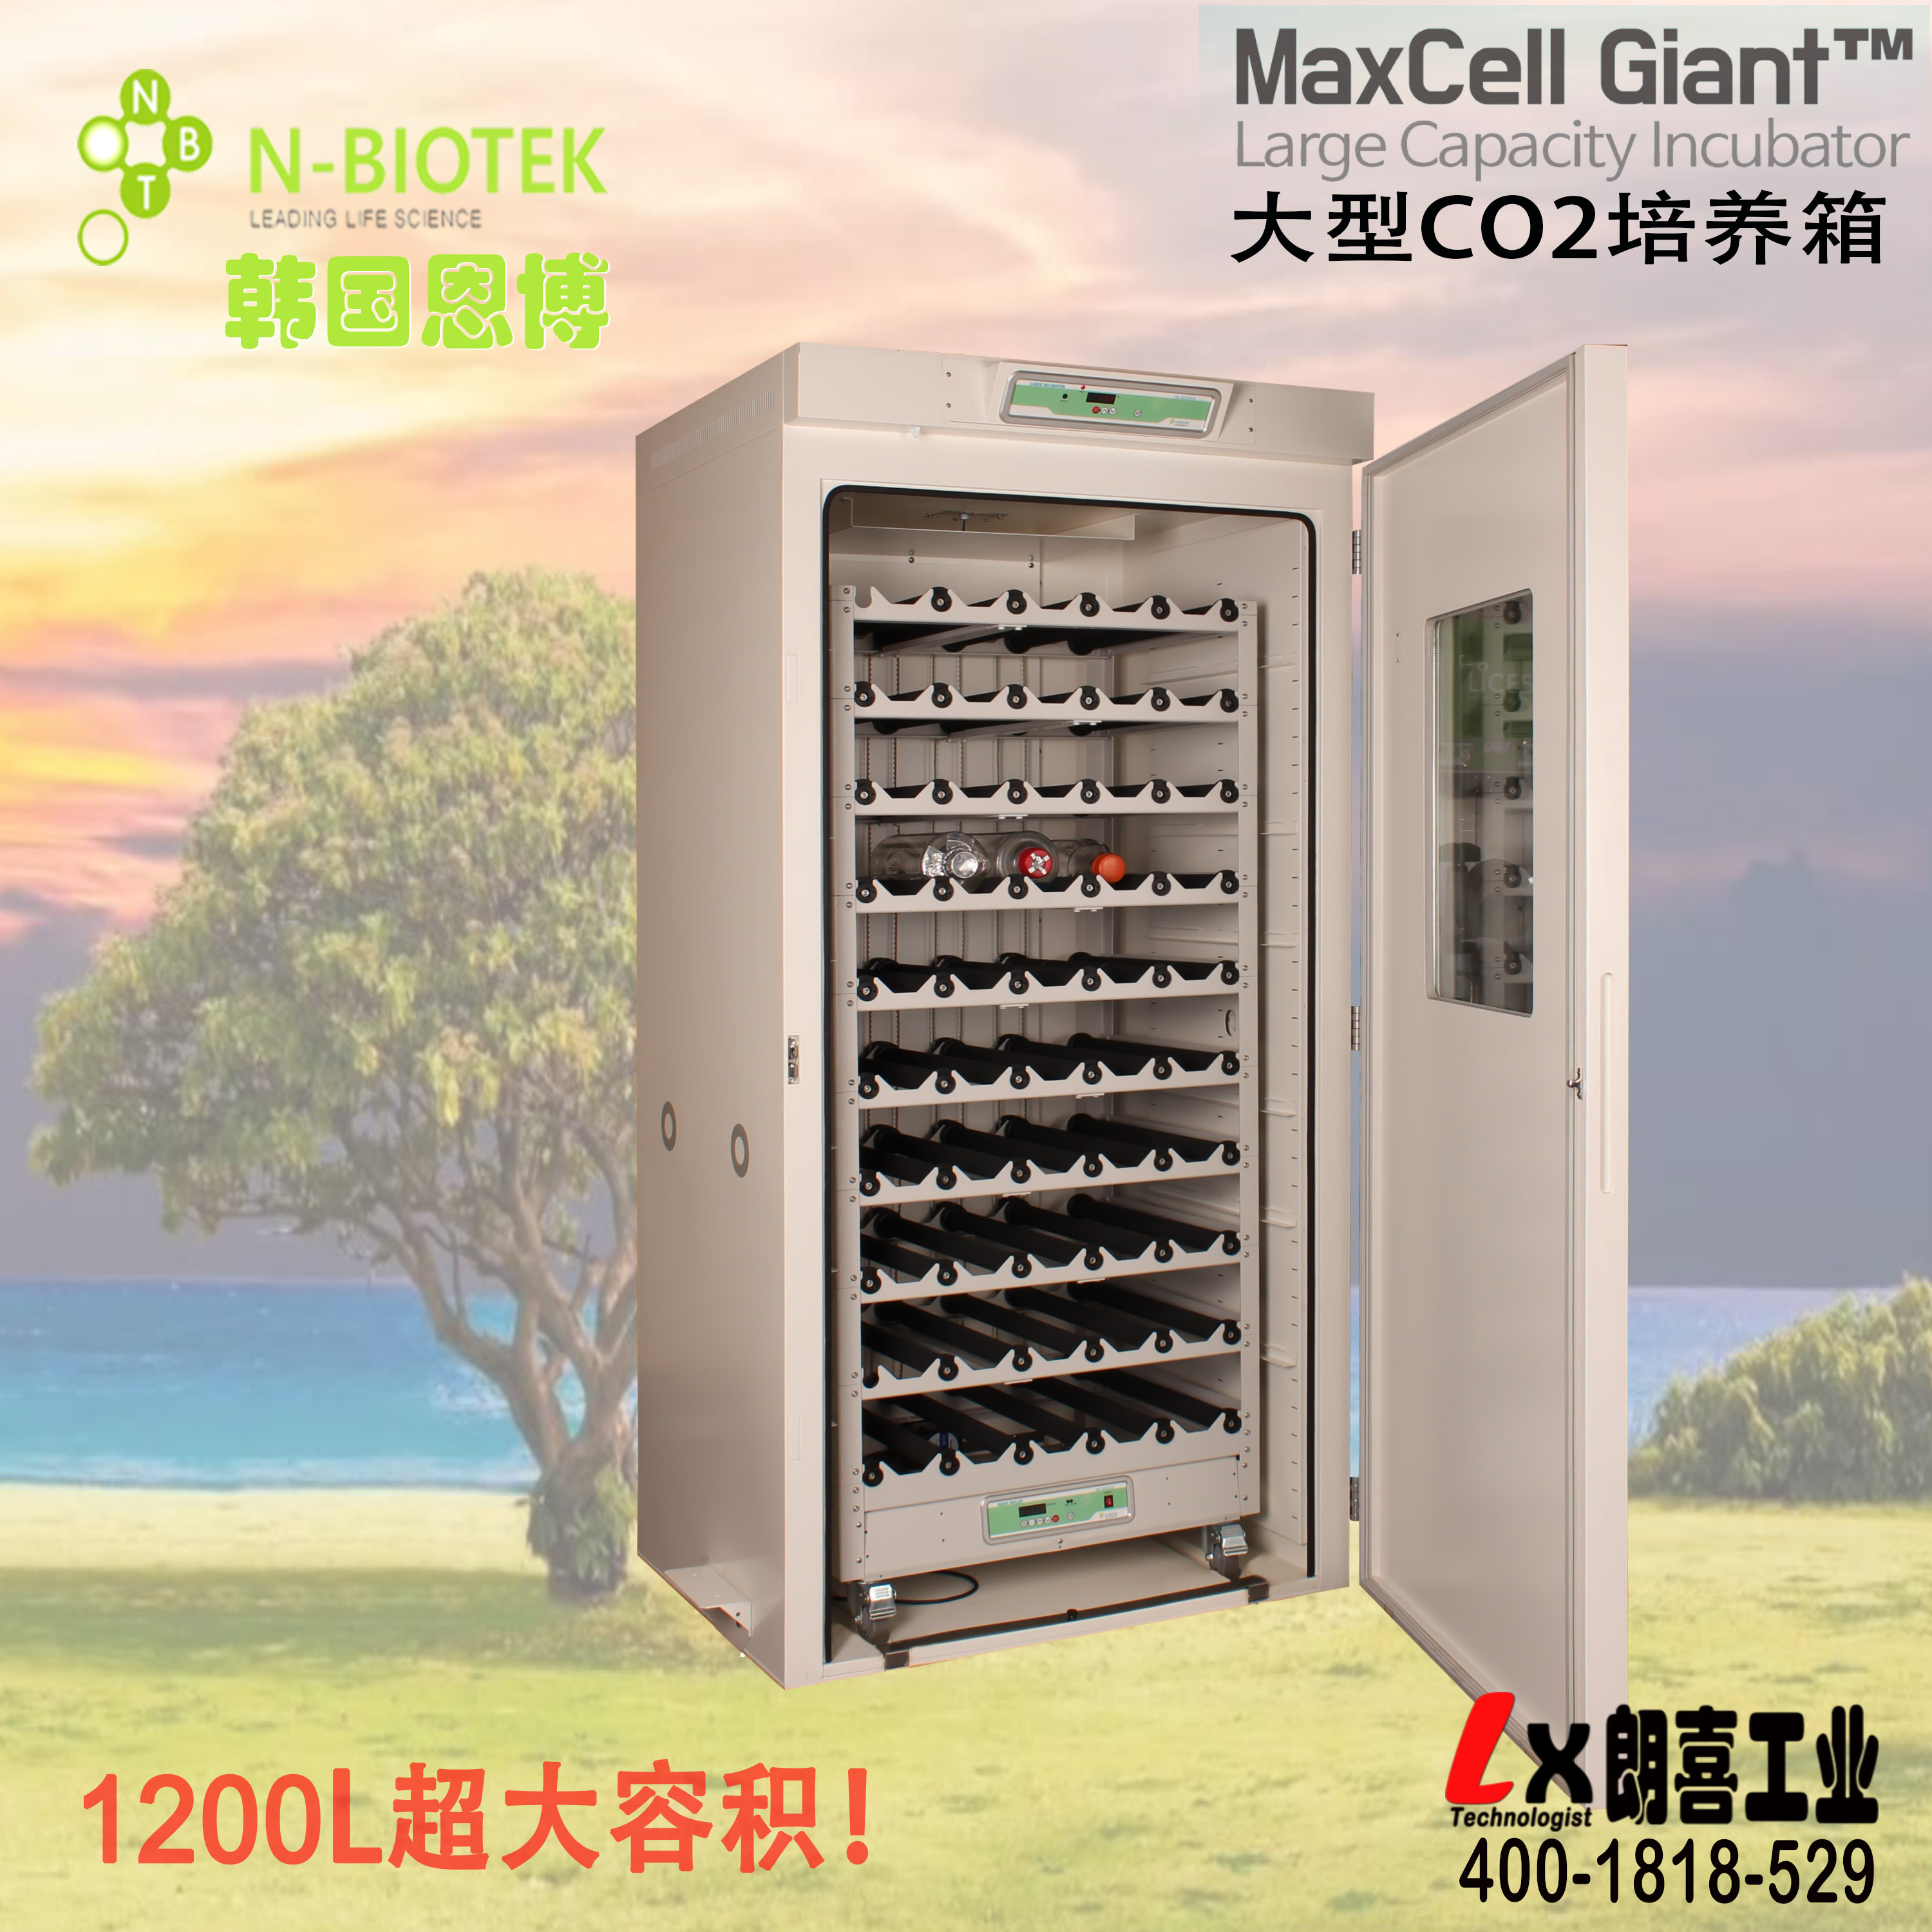 韩国N-BIOTEK大型CO2培养箱MaxCell Gaint